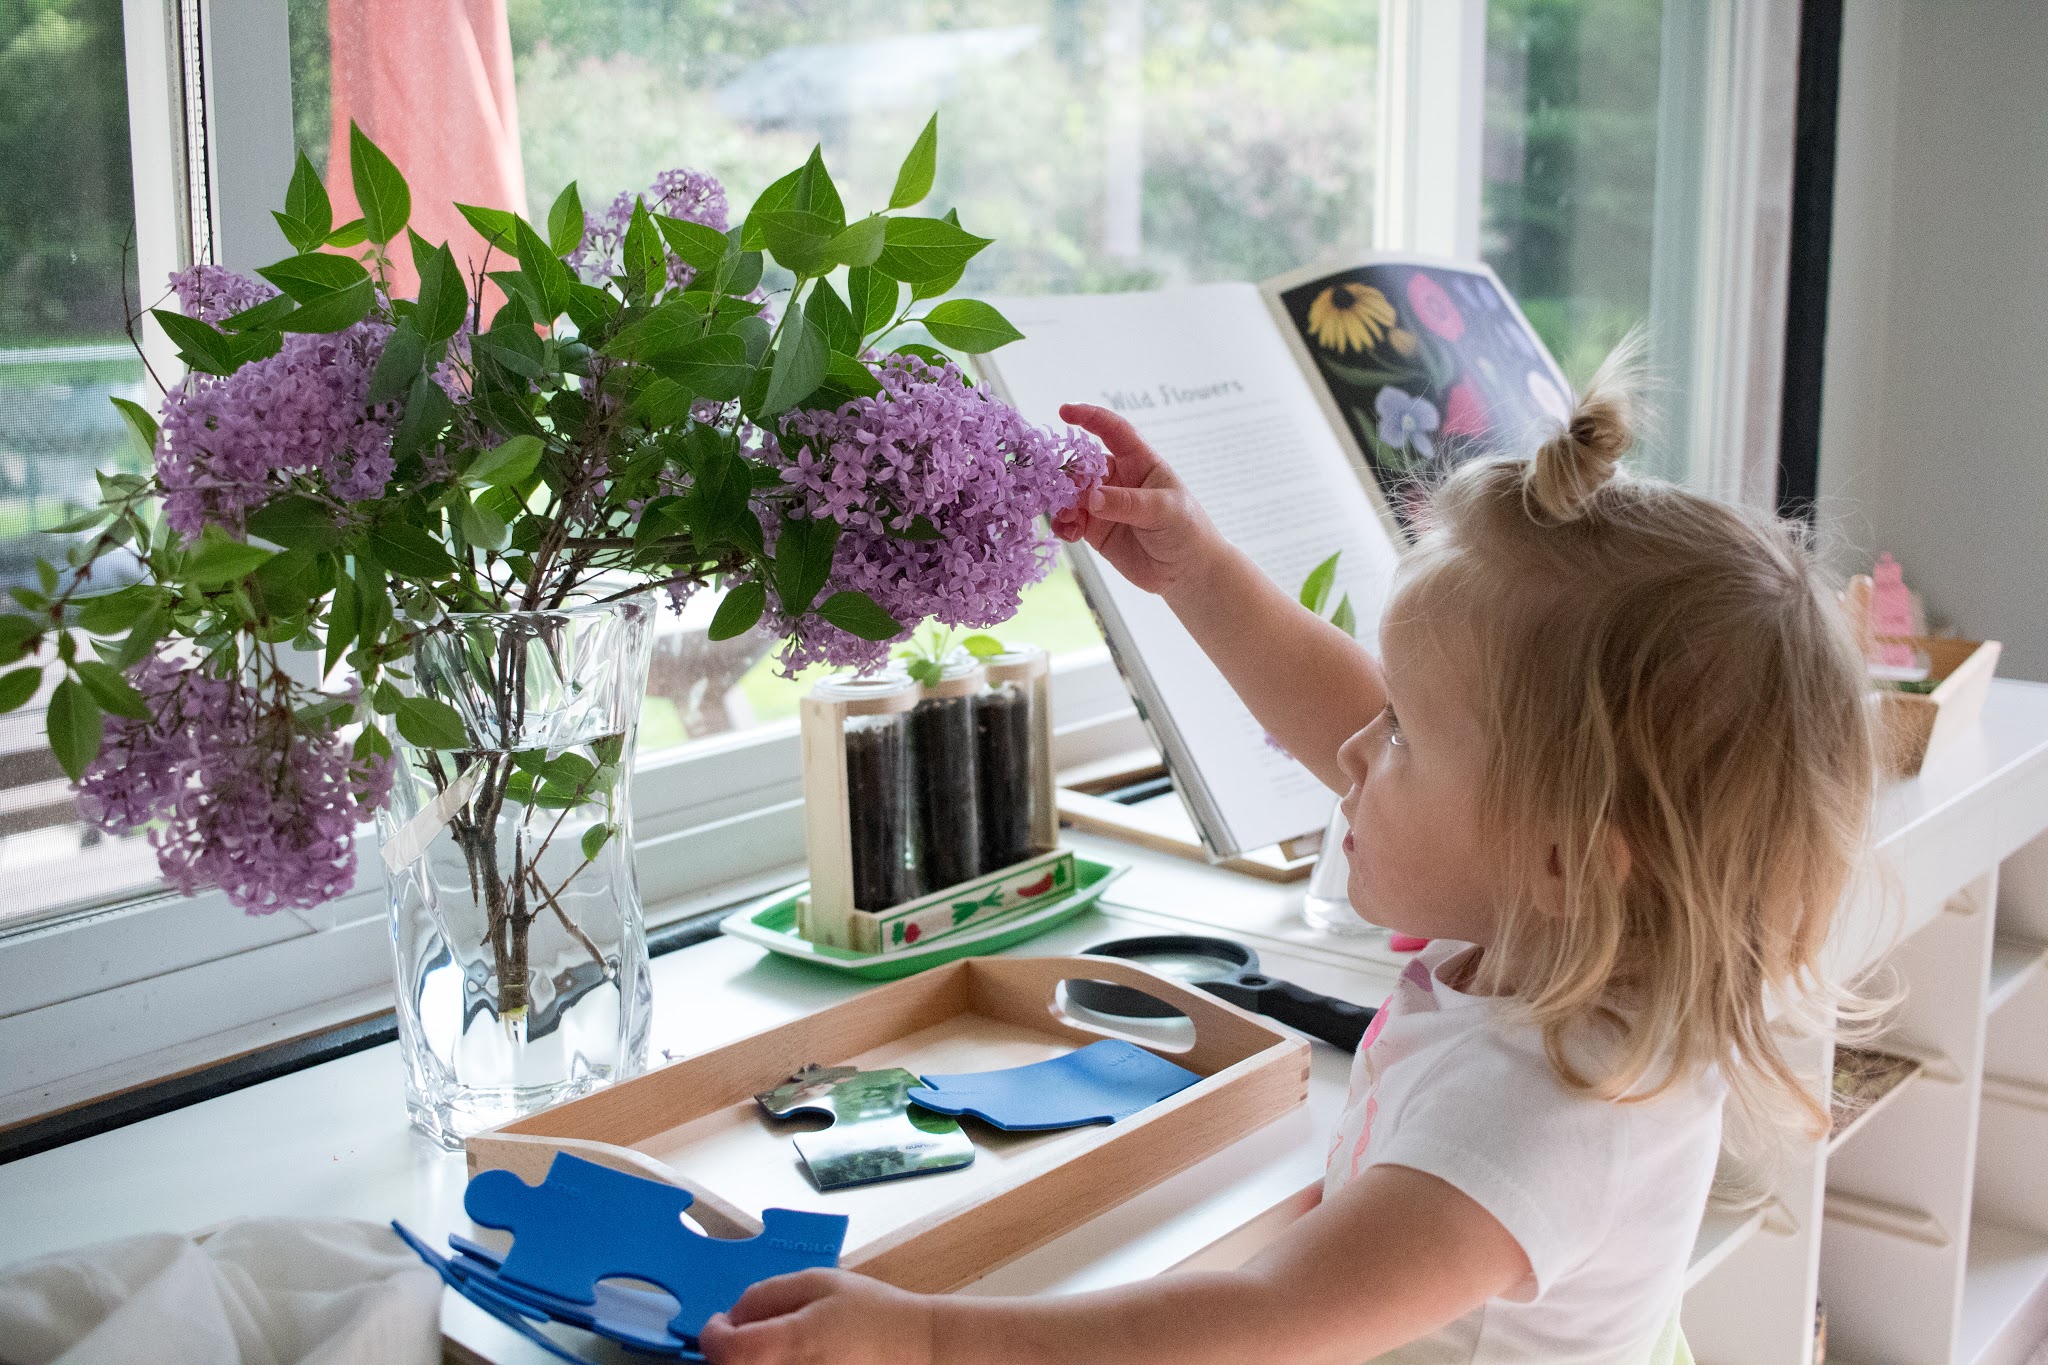 Montessori Practical Life: Flower Arranging at Home